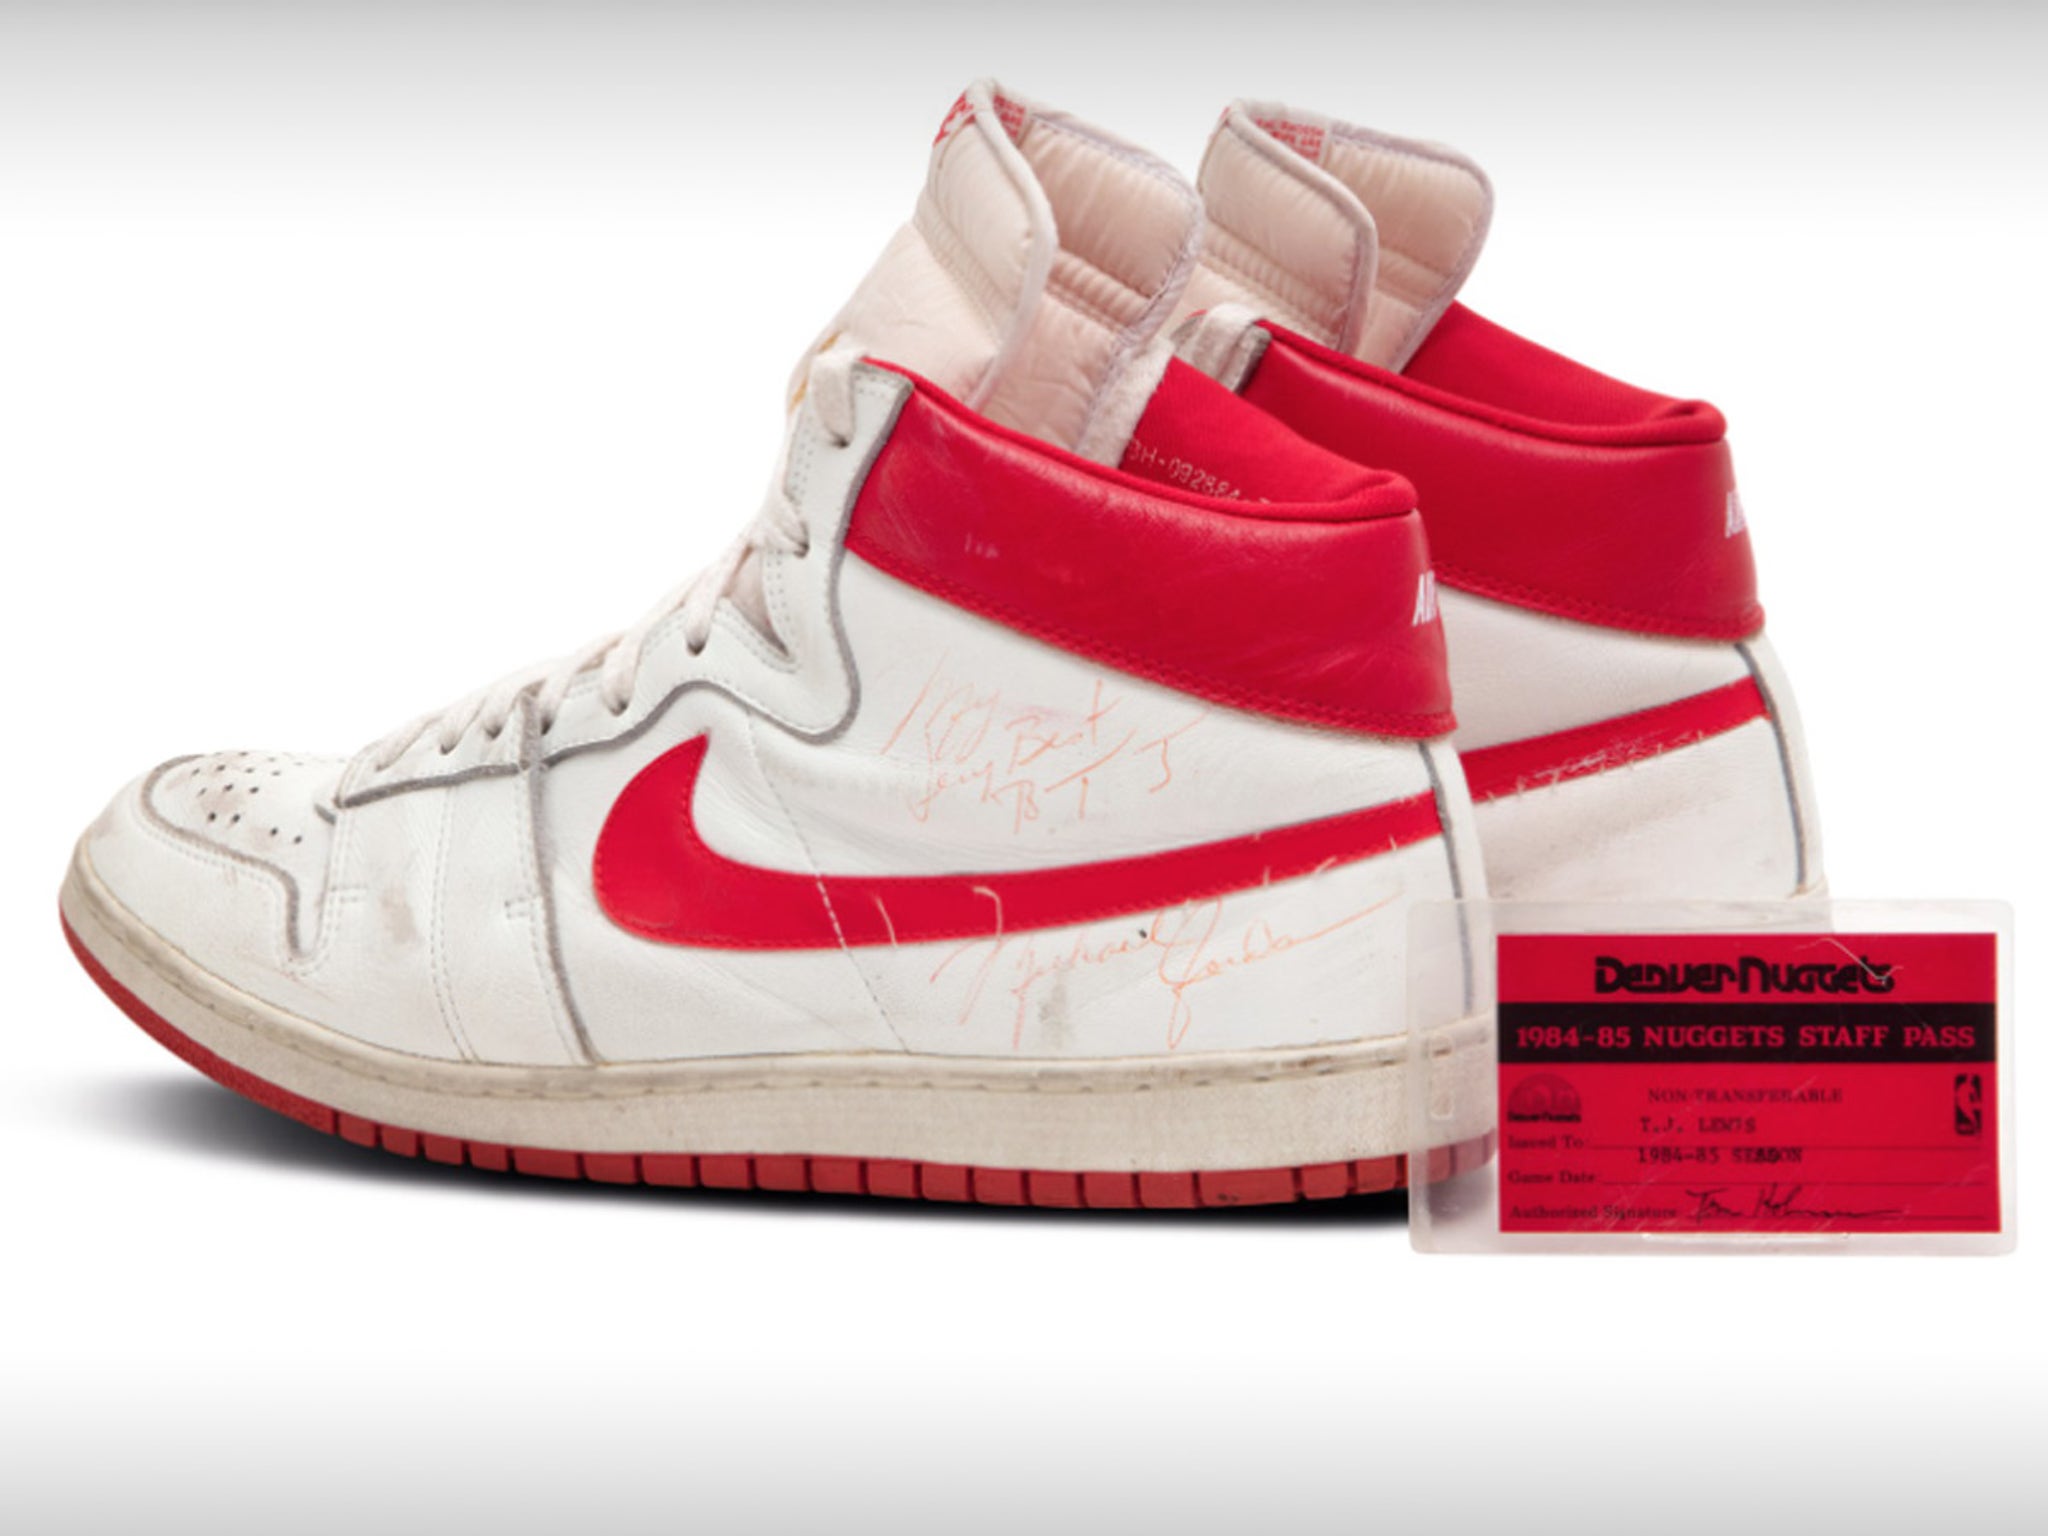 Michael Jordan's 1984 Nike Air Ships sell for record $1.5M at